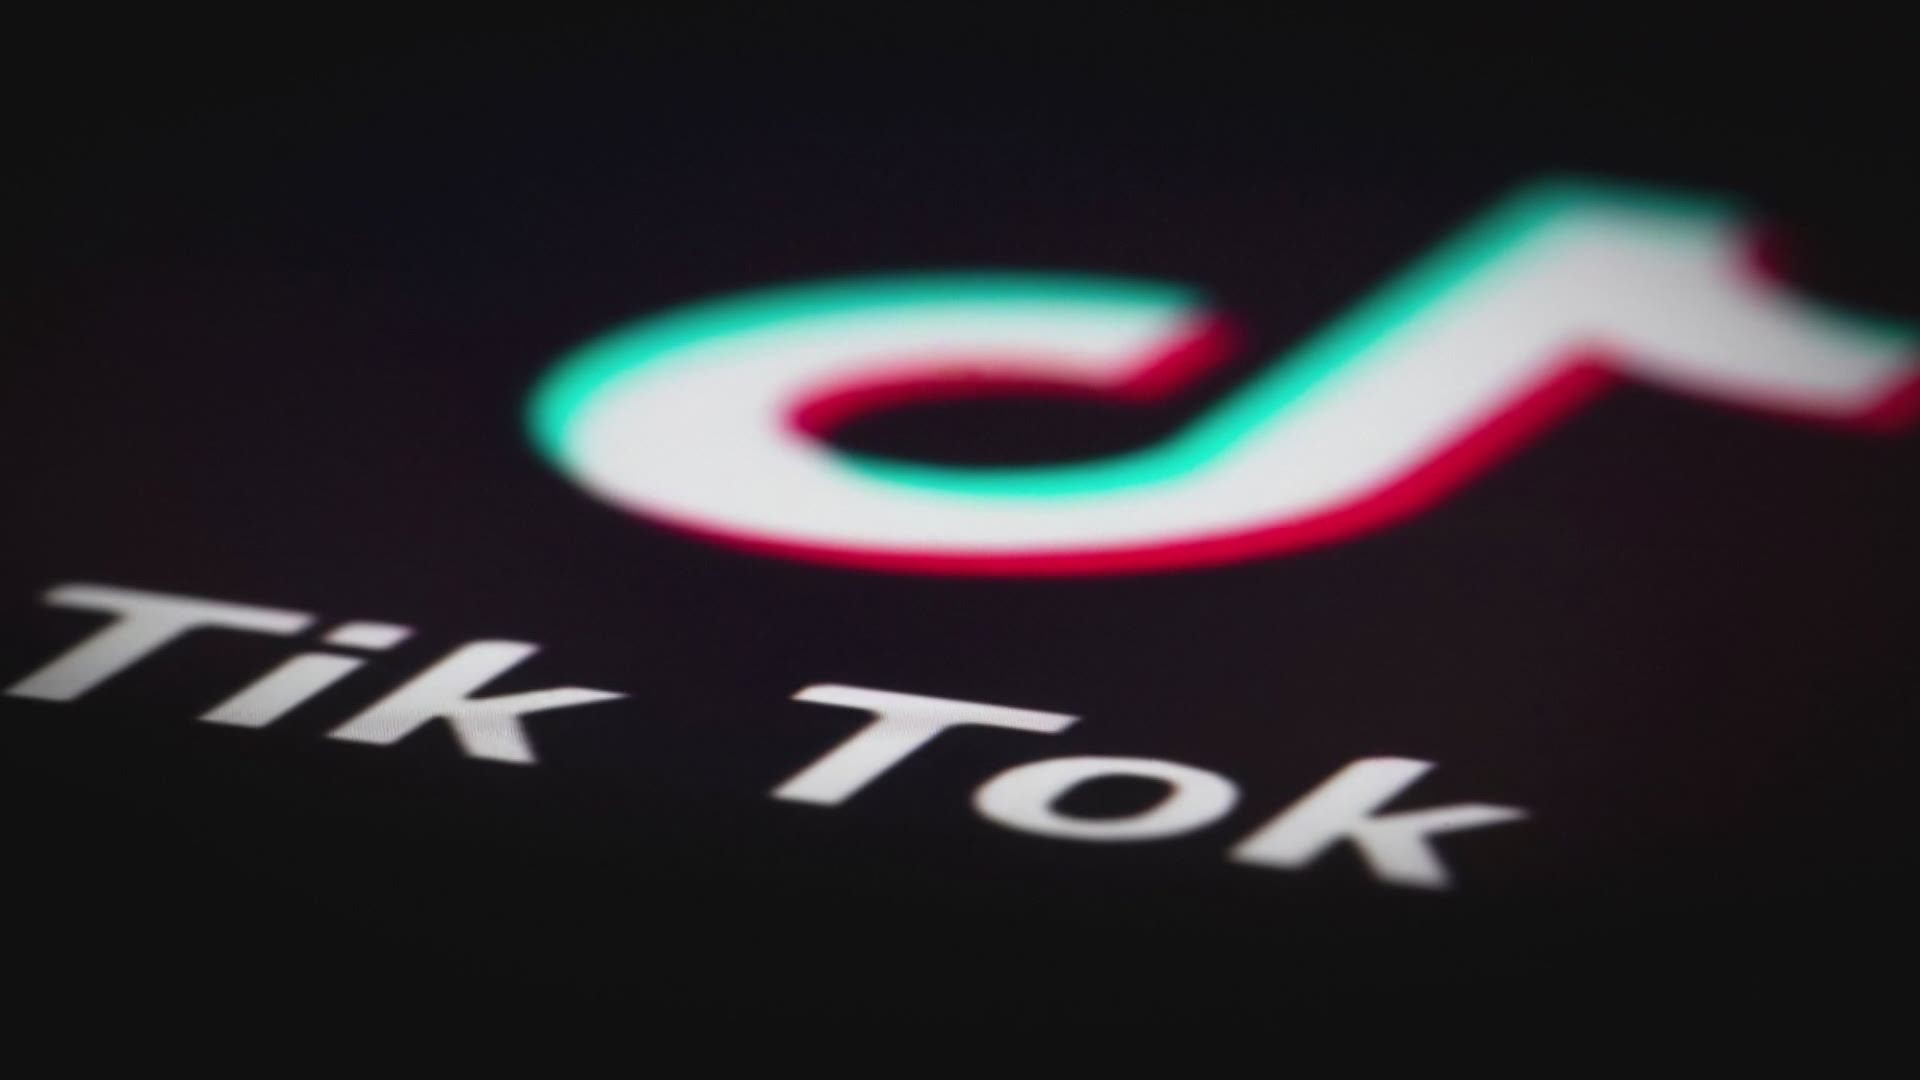 FCC commissioner says US should ban TikTok: Report - ABC News